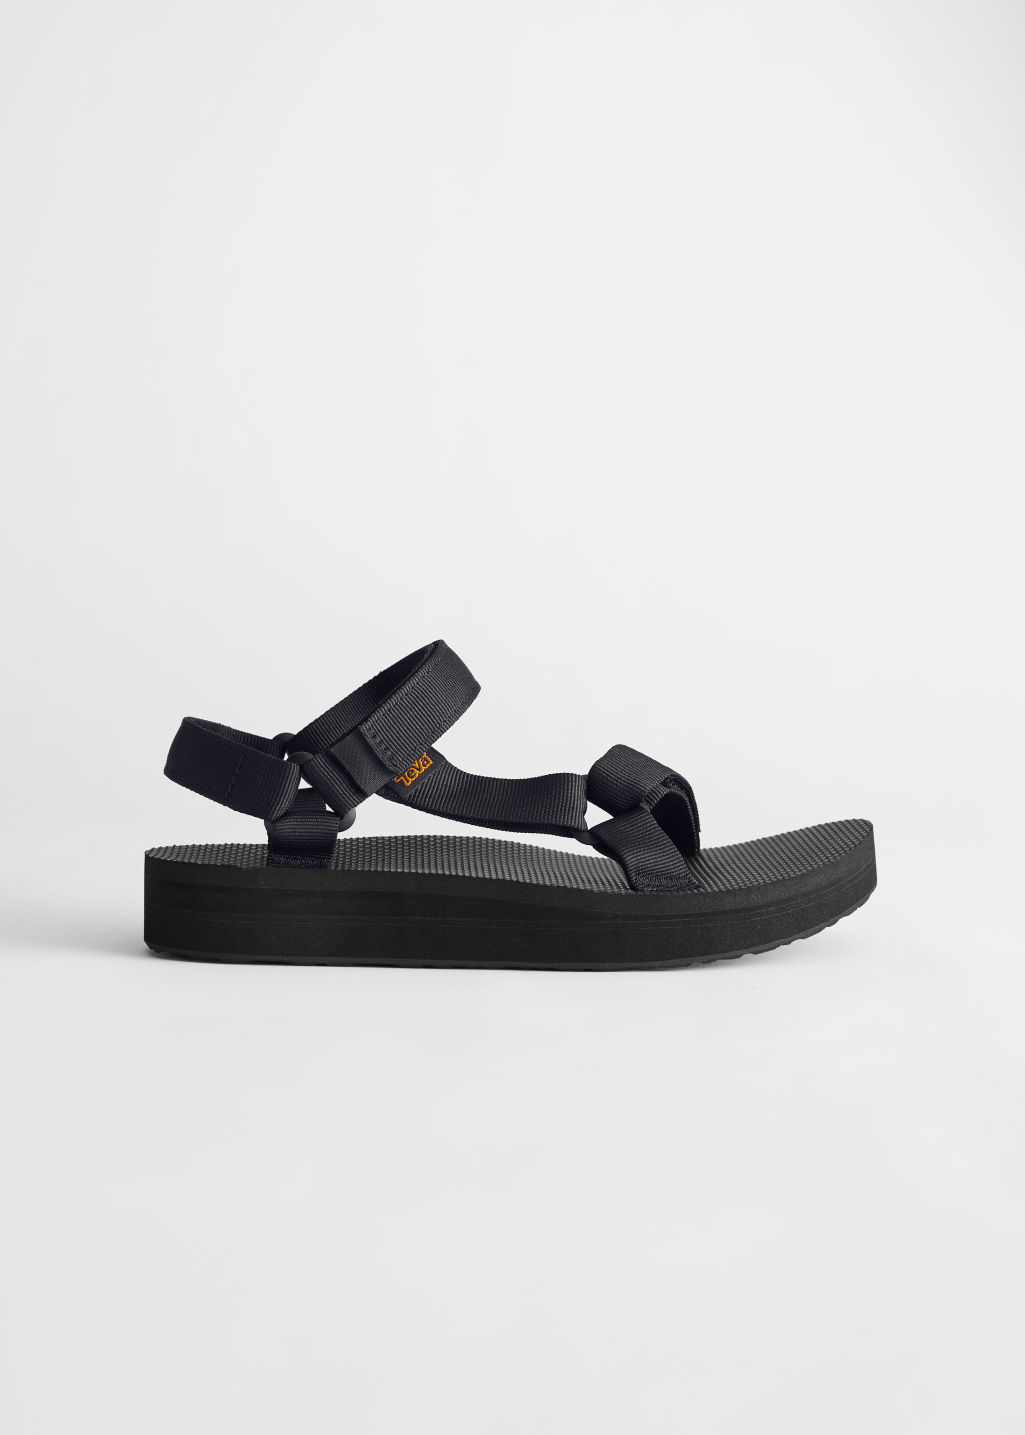 Teva Velcro Sandals - Black - Teva - & Other Stories - Click Image to Close